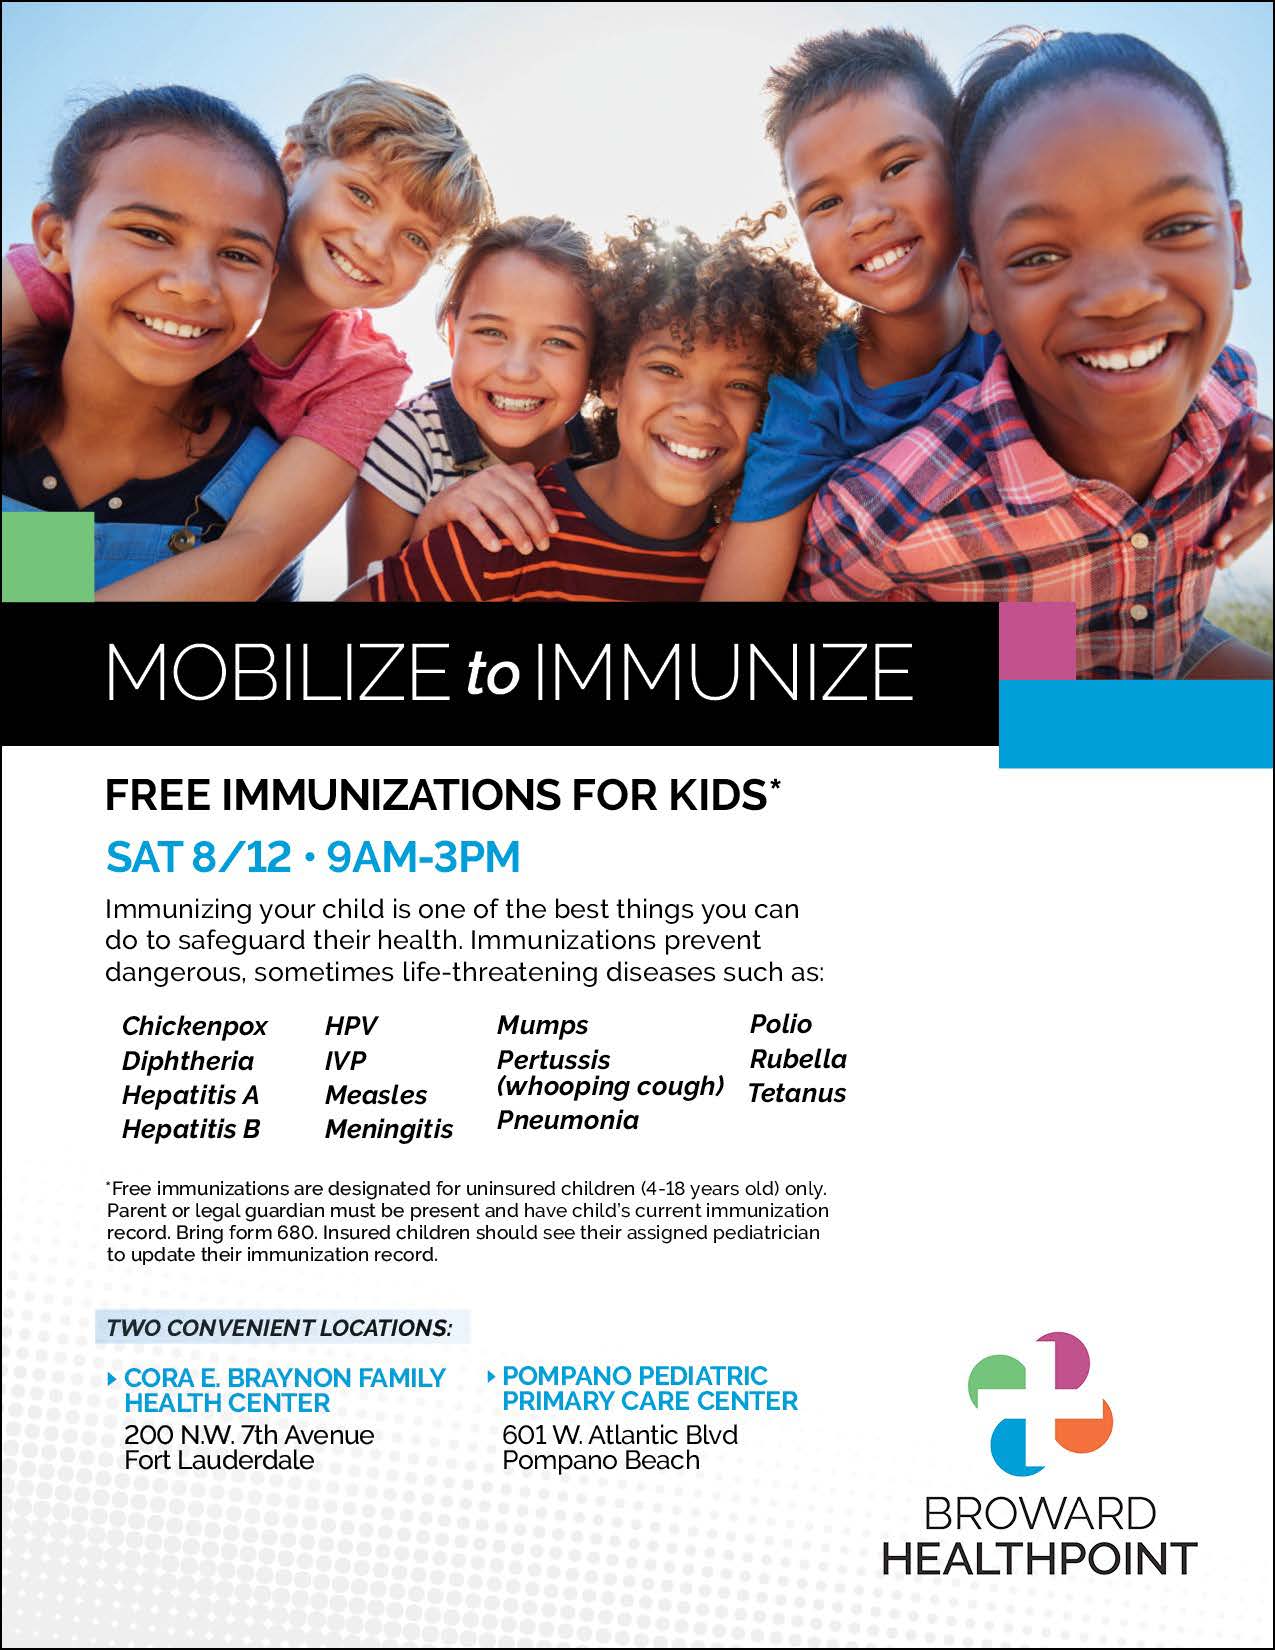 Broward Health’s Mobilize to Immunize